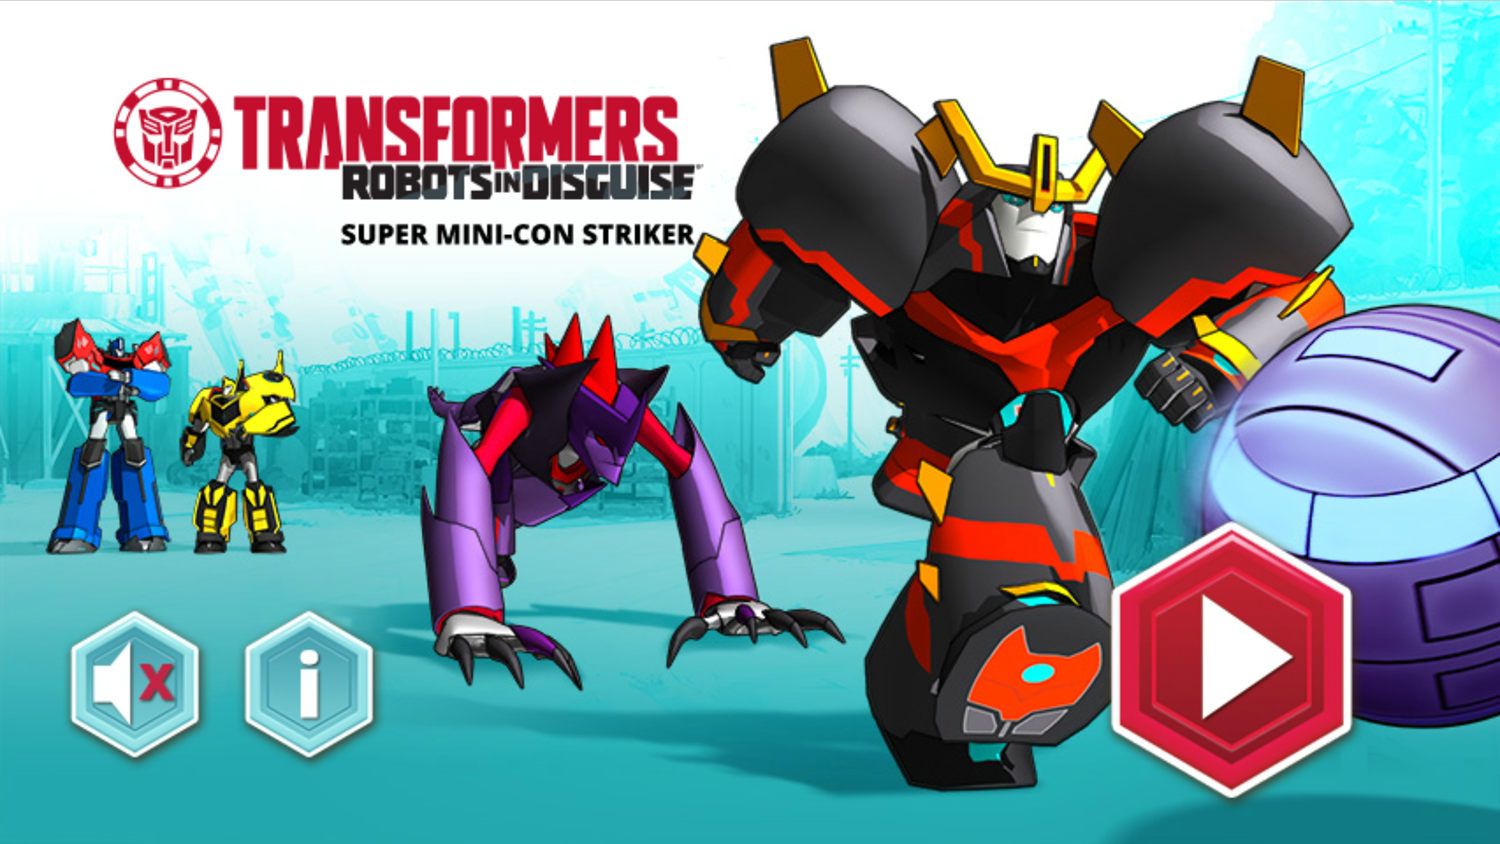 Transformers Super Mini Con Striker Game Welcome Screen Screenshot.